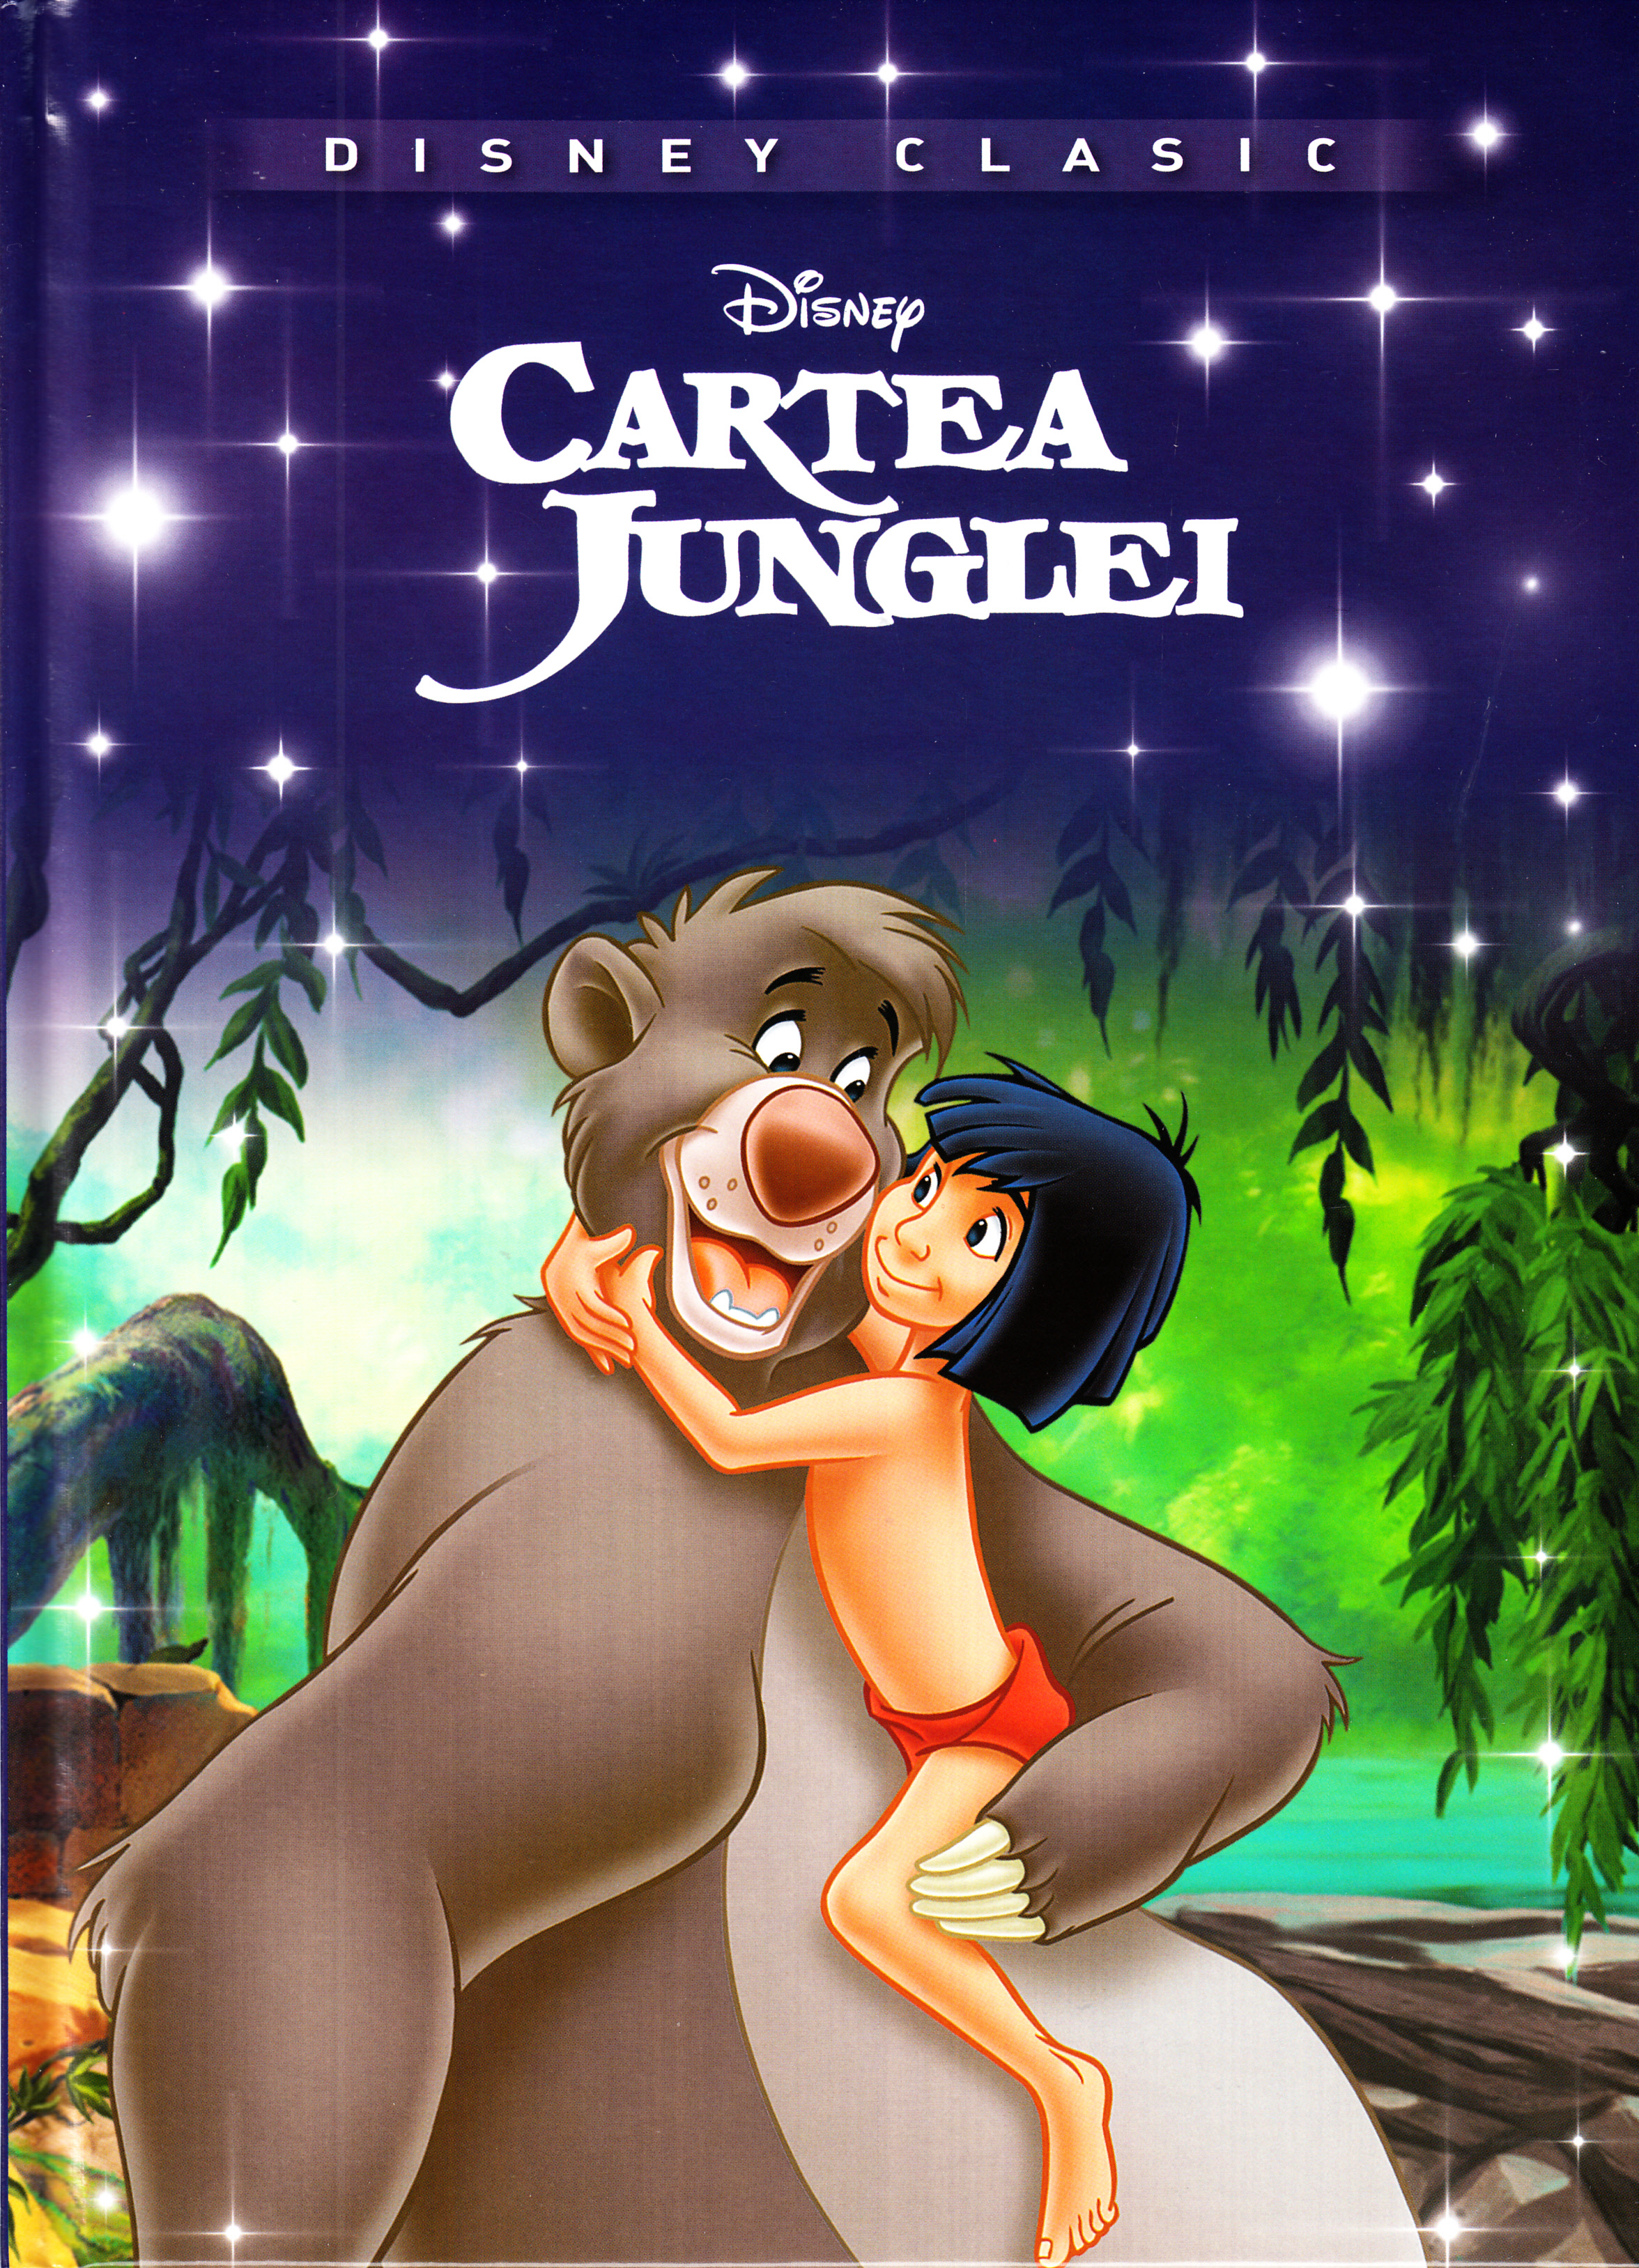 Disney Clasic - Cartea Junglei